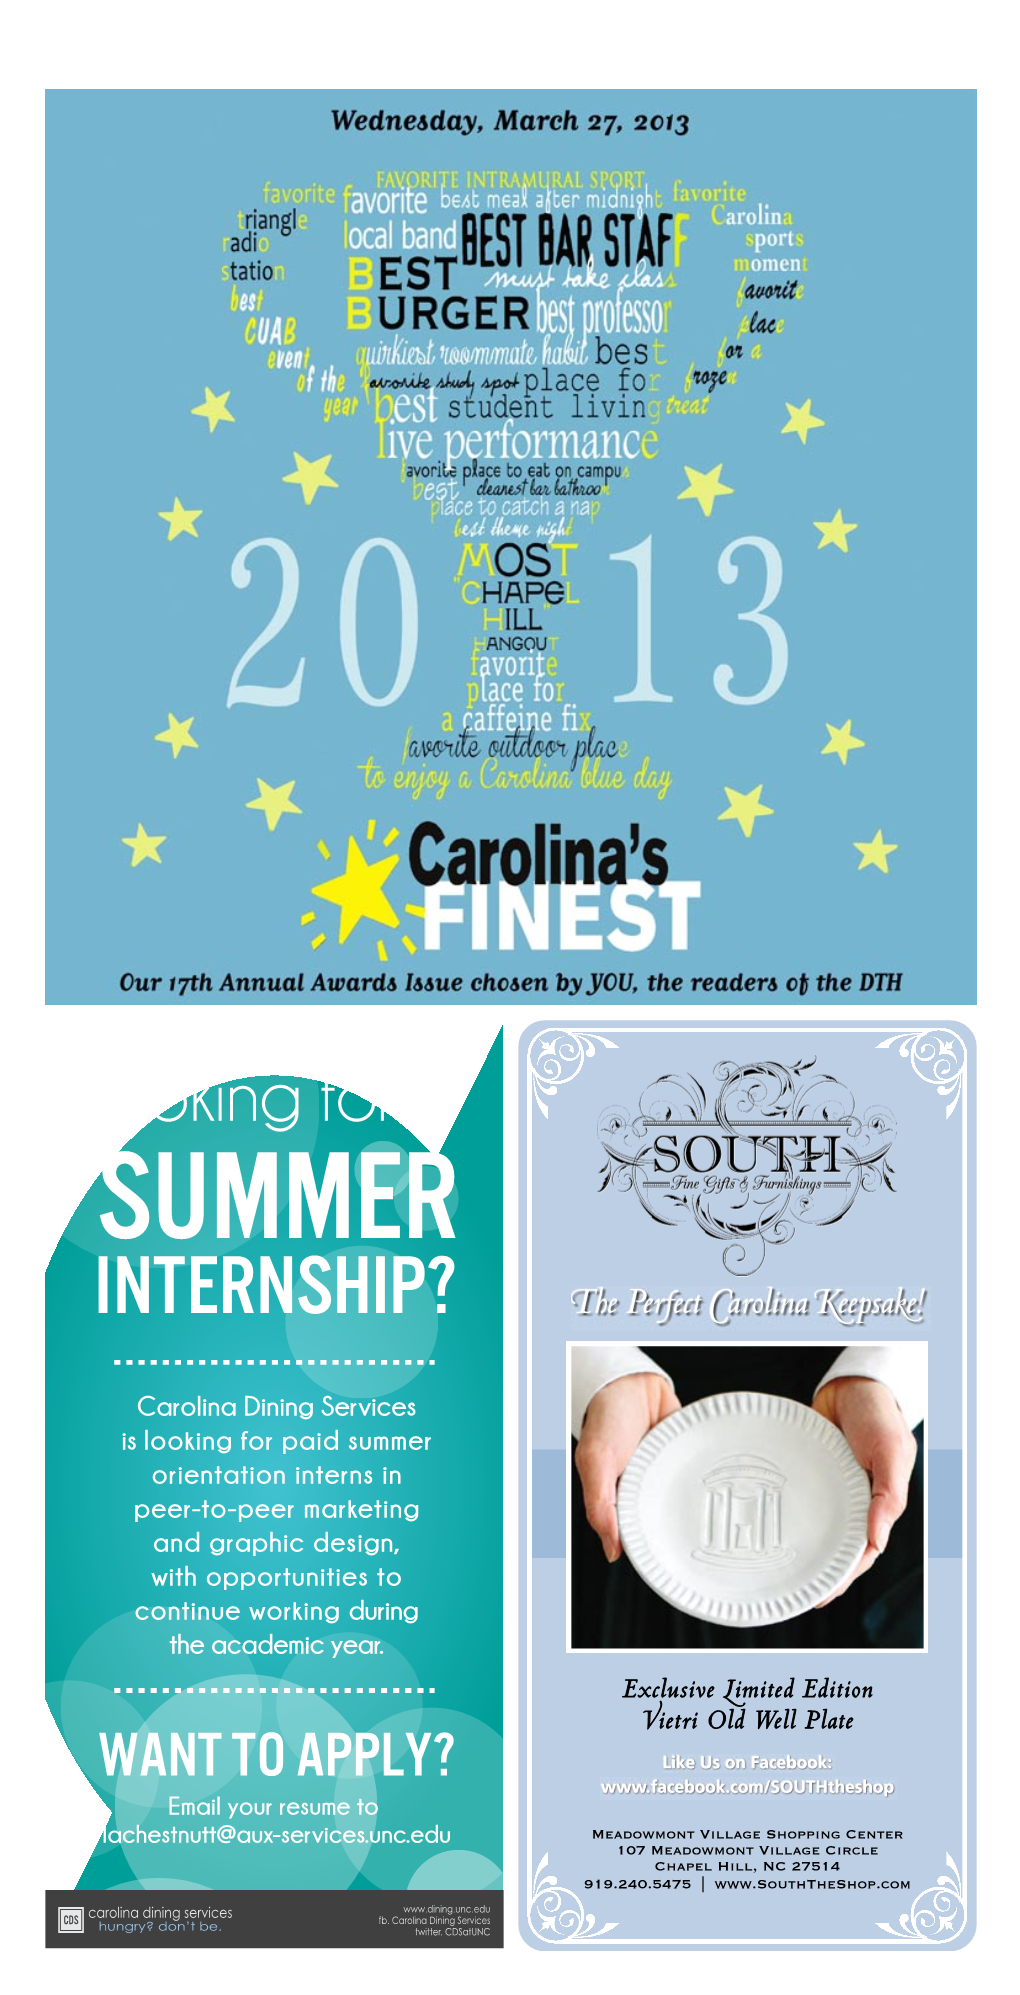 Looking for a Summer Internship? the Perfect Carolina Keepsake!